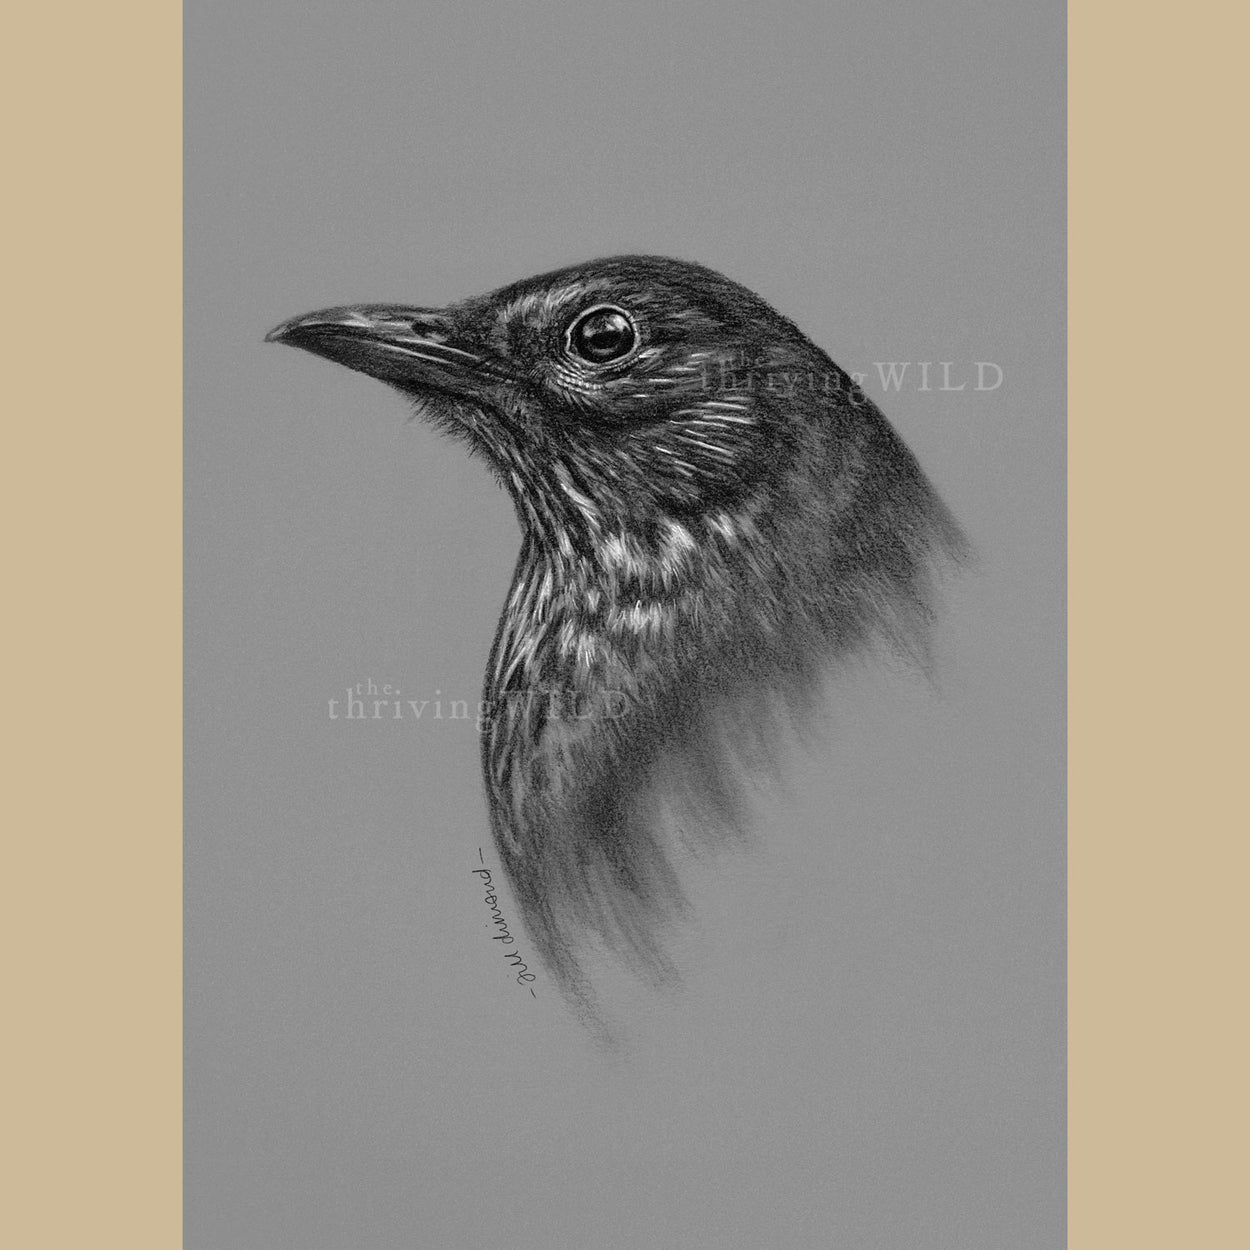 Female Blackbird Charcoal Drawing - The Thriving Wild - Jill Dimond